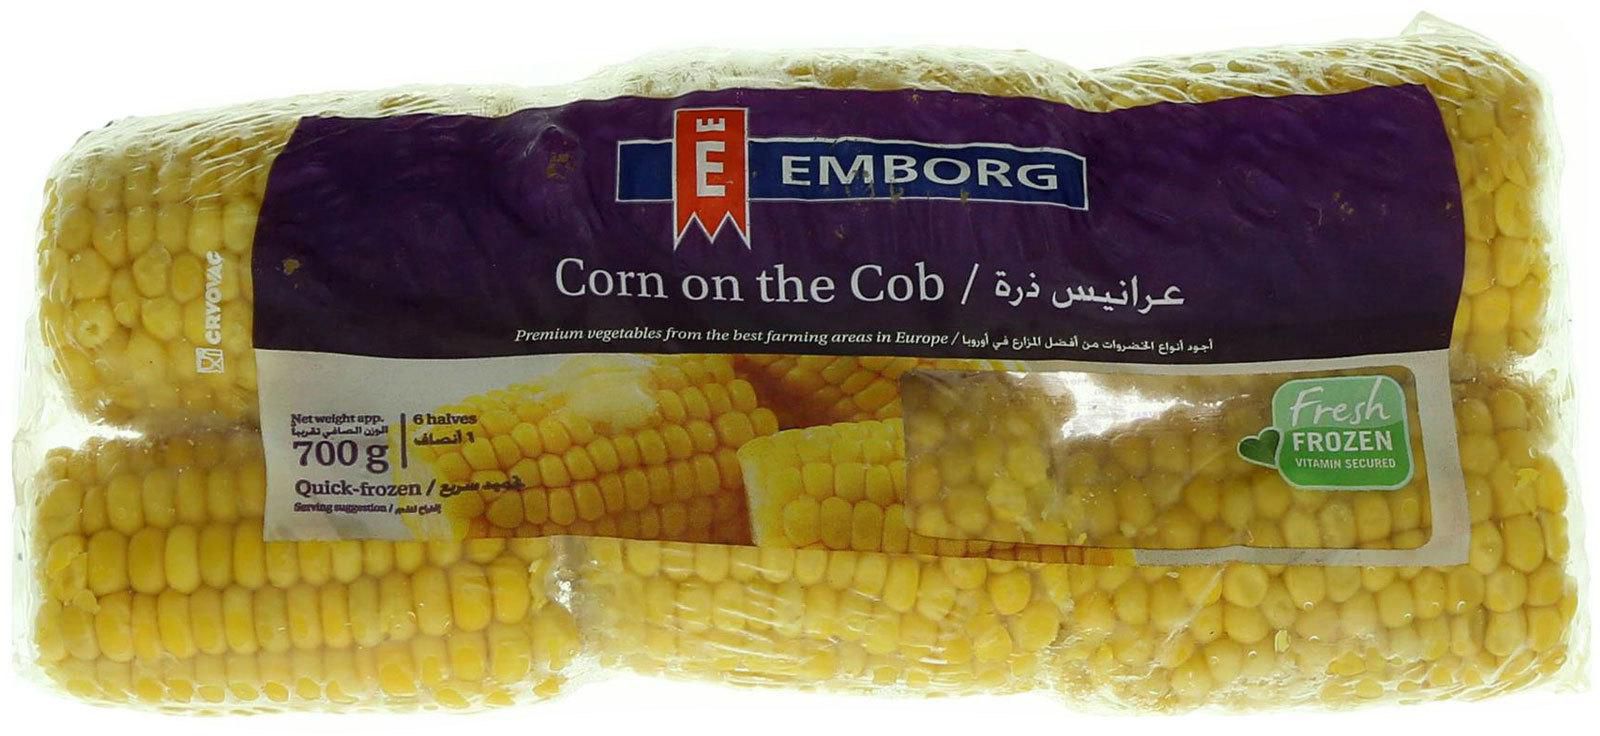 EMBORG Corn On The Cob, 700g